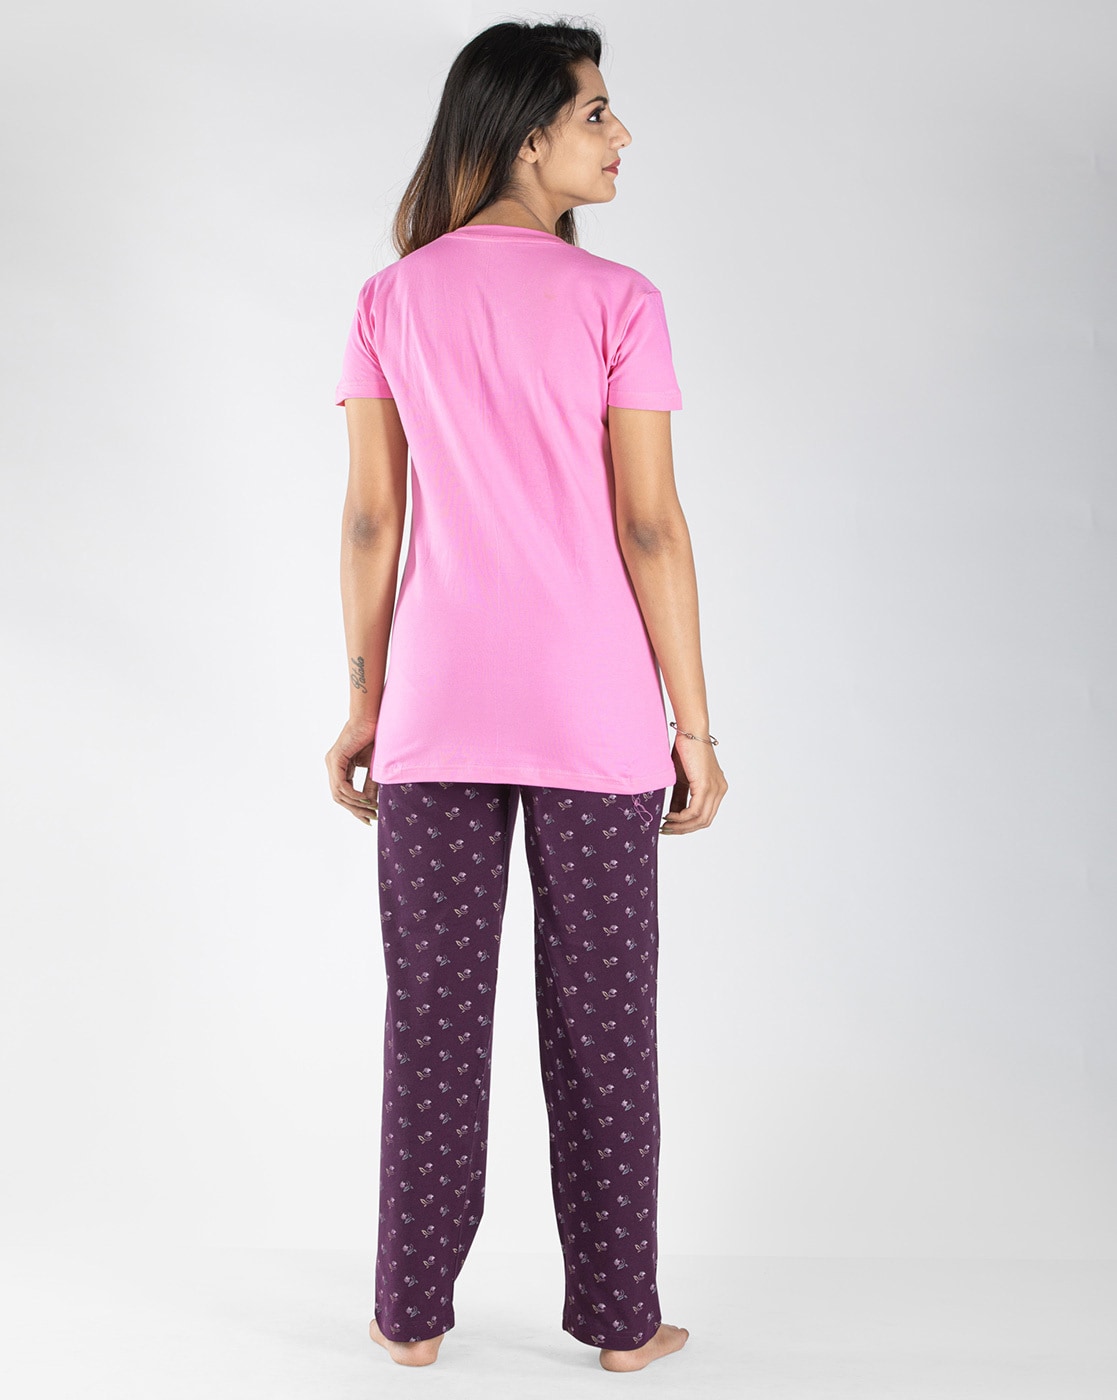 Summer Special New York Vol 1 Ladies Wear Joggers Sleepwear Suit Catalog  Supplier